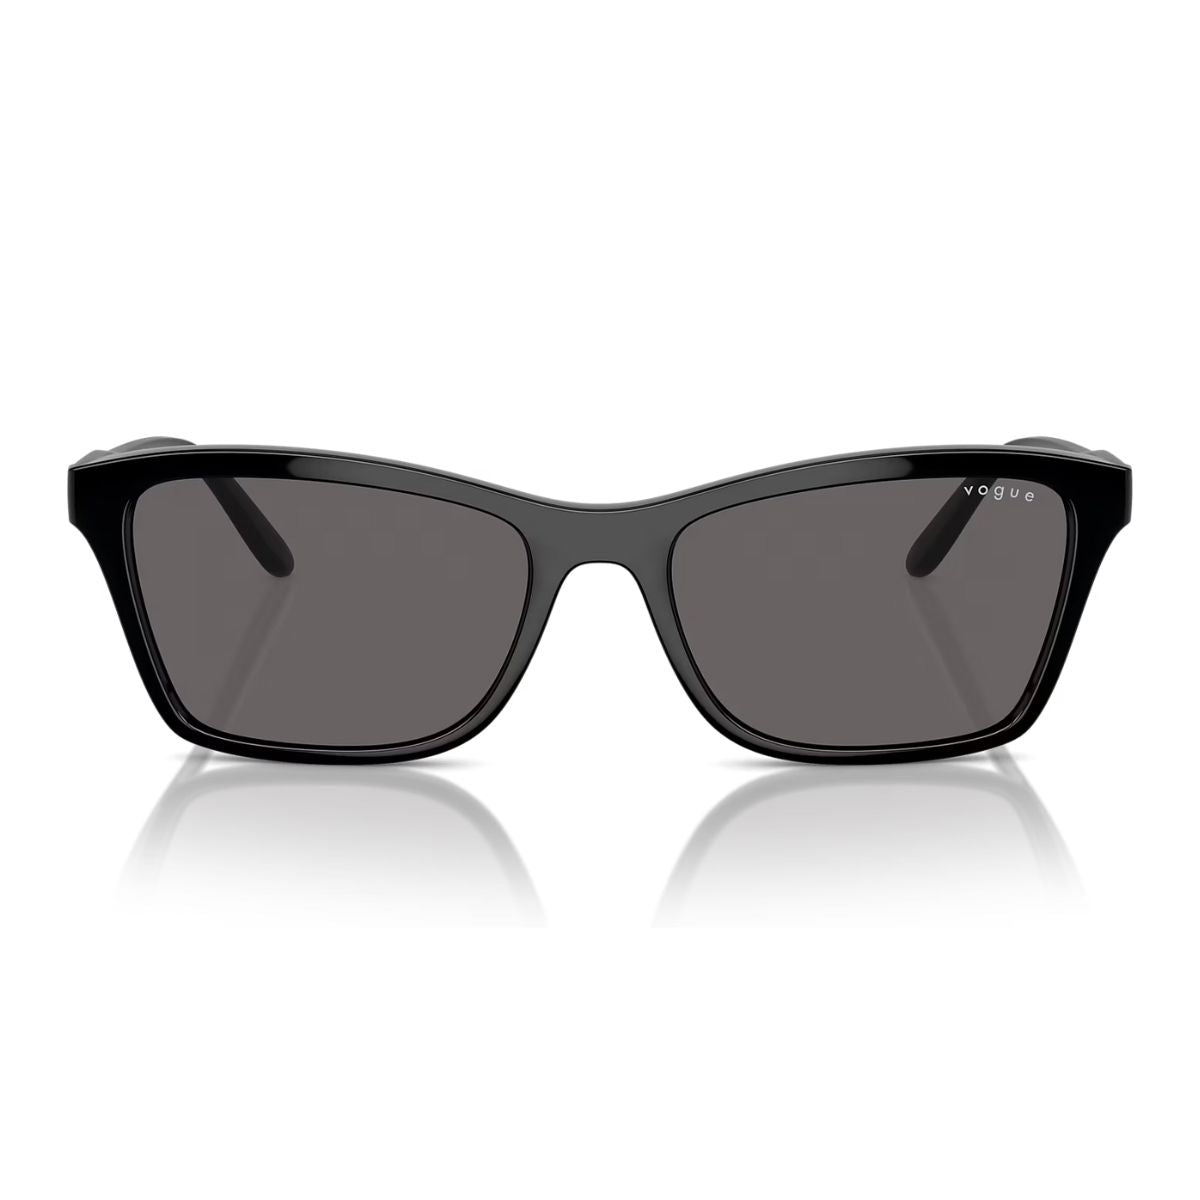 "Shop Stylish Vogue Eyewear UV Protection Sunglasses For Women's At Optorium | Free Shipping"